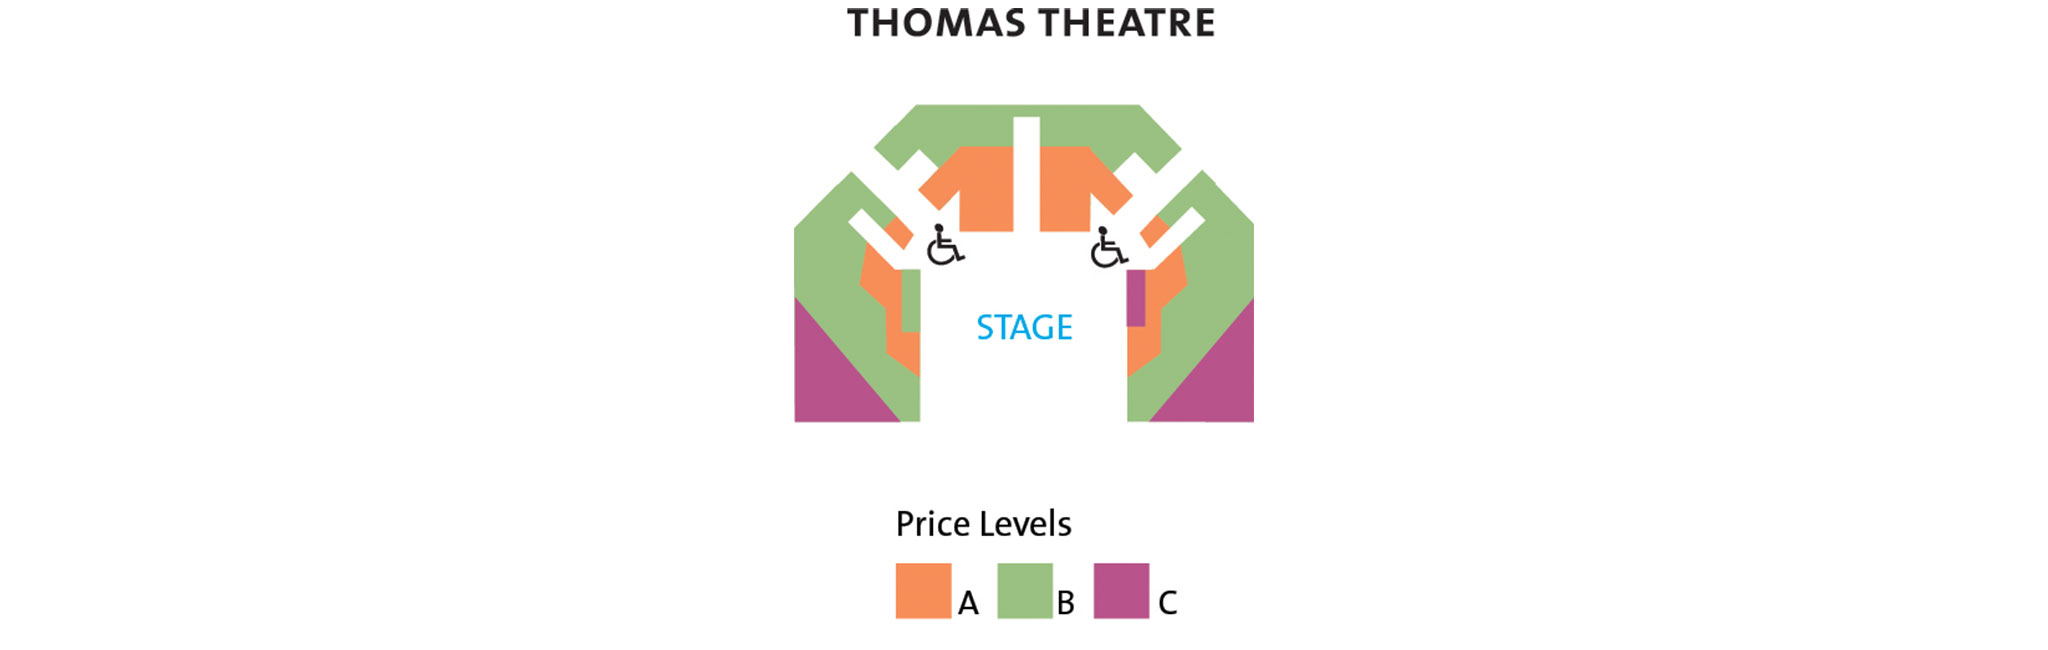 Thomas Theater seating chart.